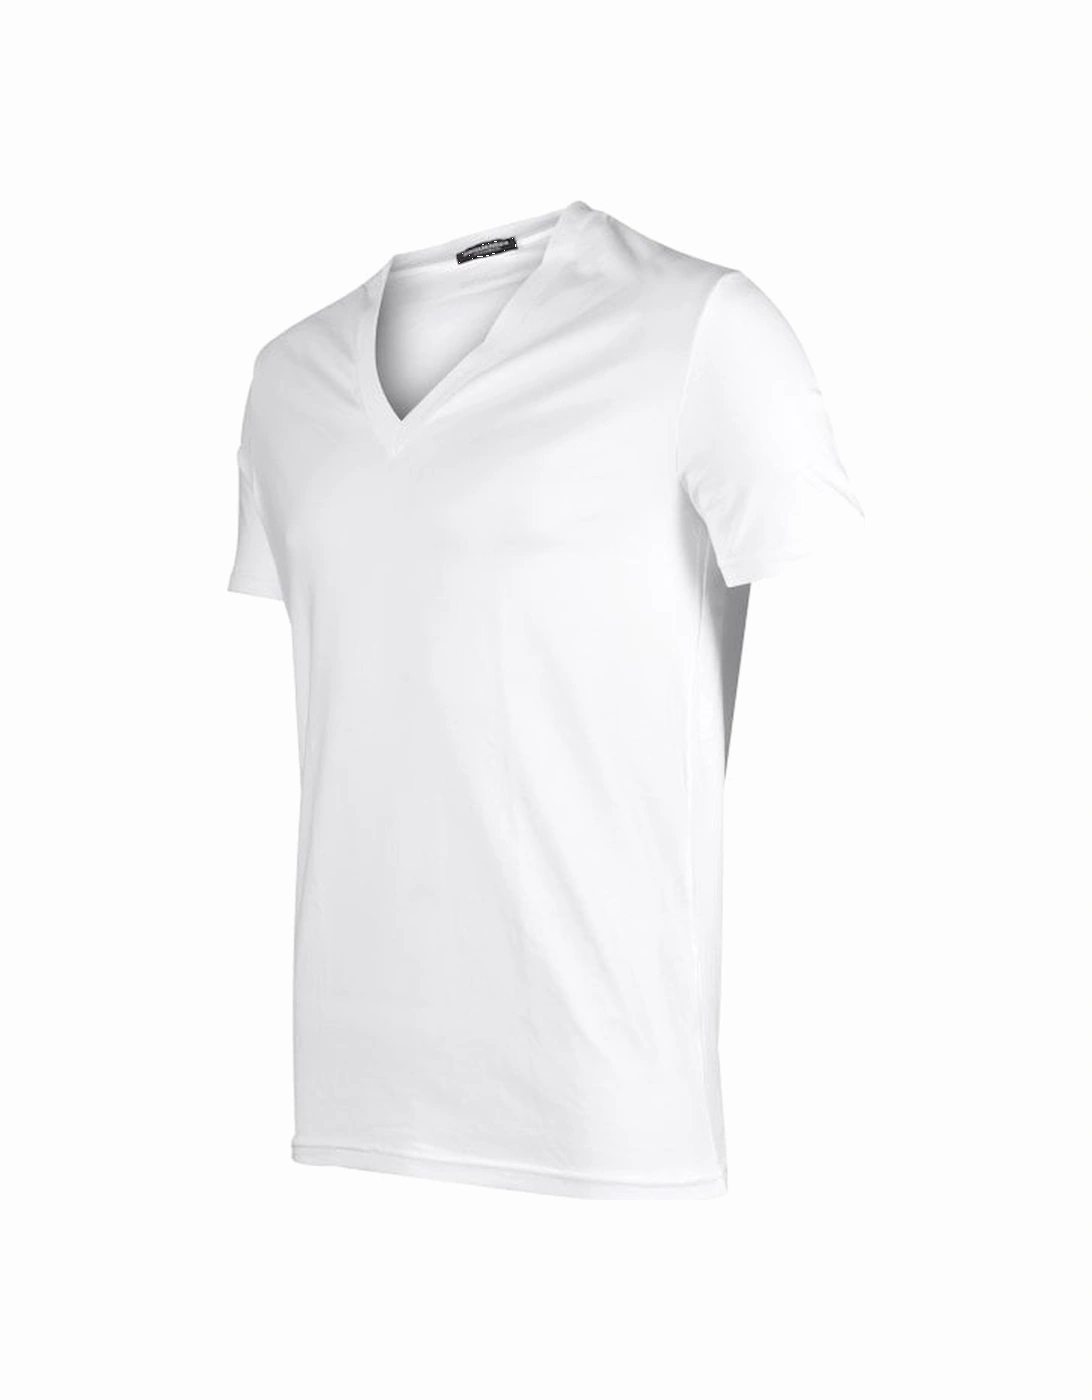 Cotton Stretch V-Neck T-Shirt, White